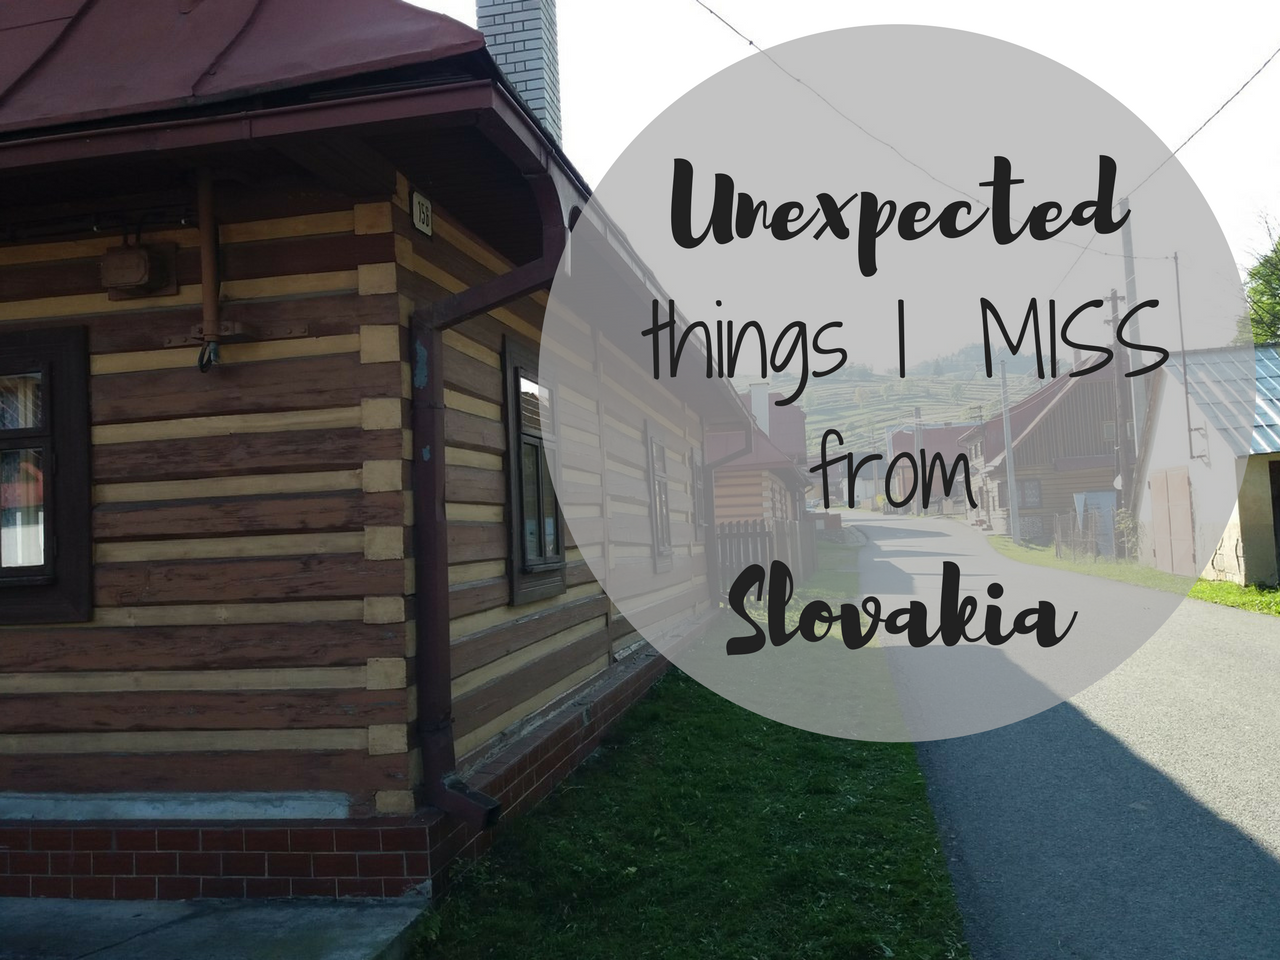 Things I Miss From Slovakia